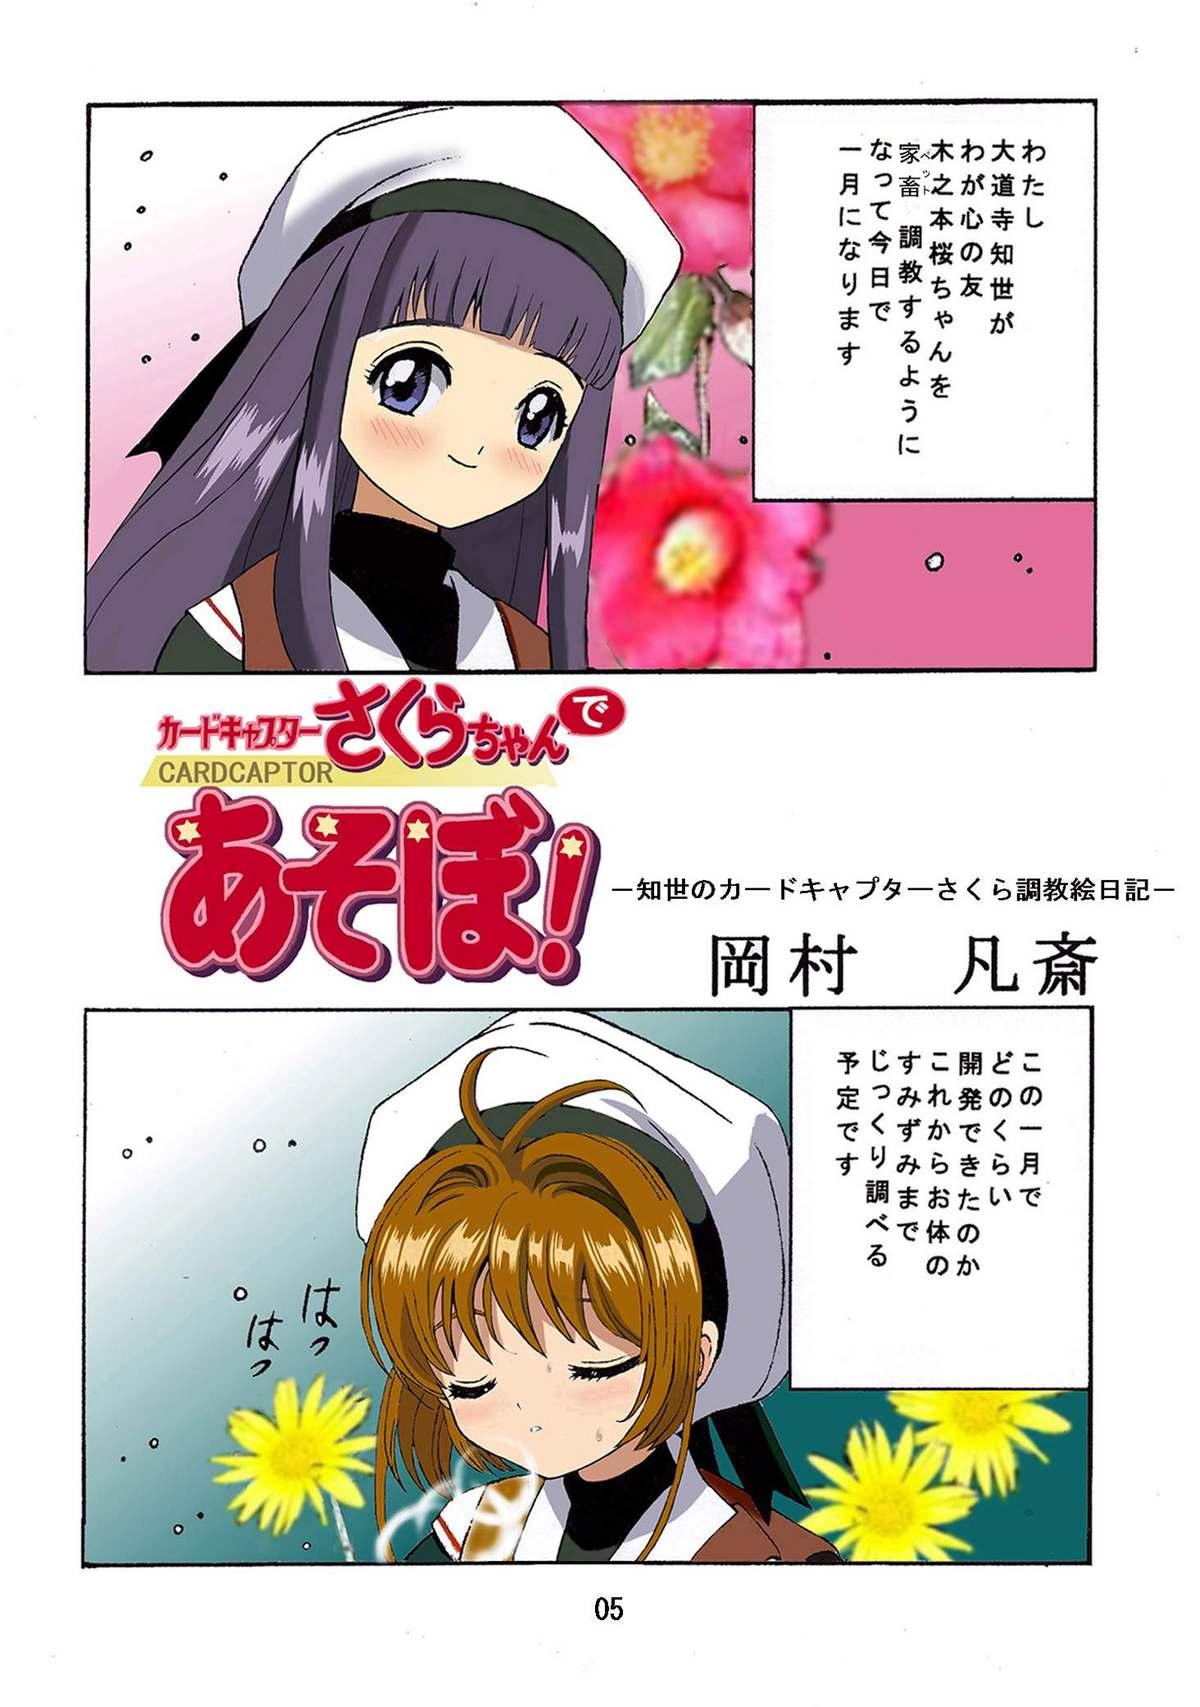 Footworship Kuuronziyou 1 Full Color & TV Animation Ban - Cardcaptor sakura Spy - Page 4